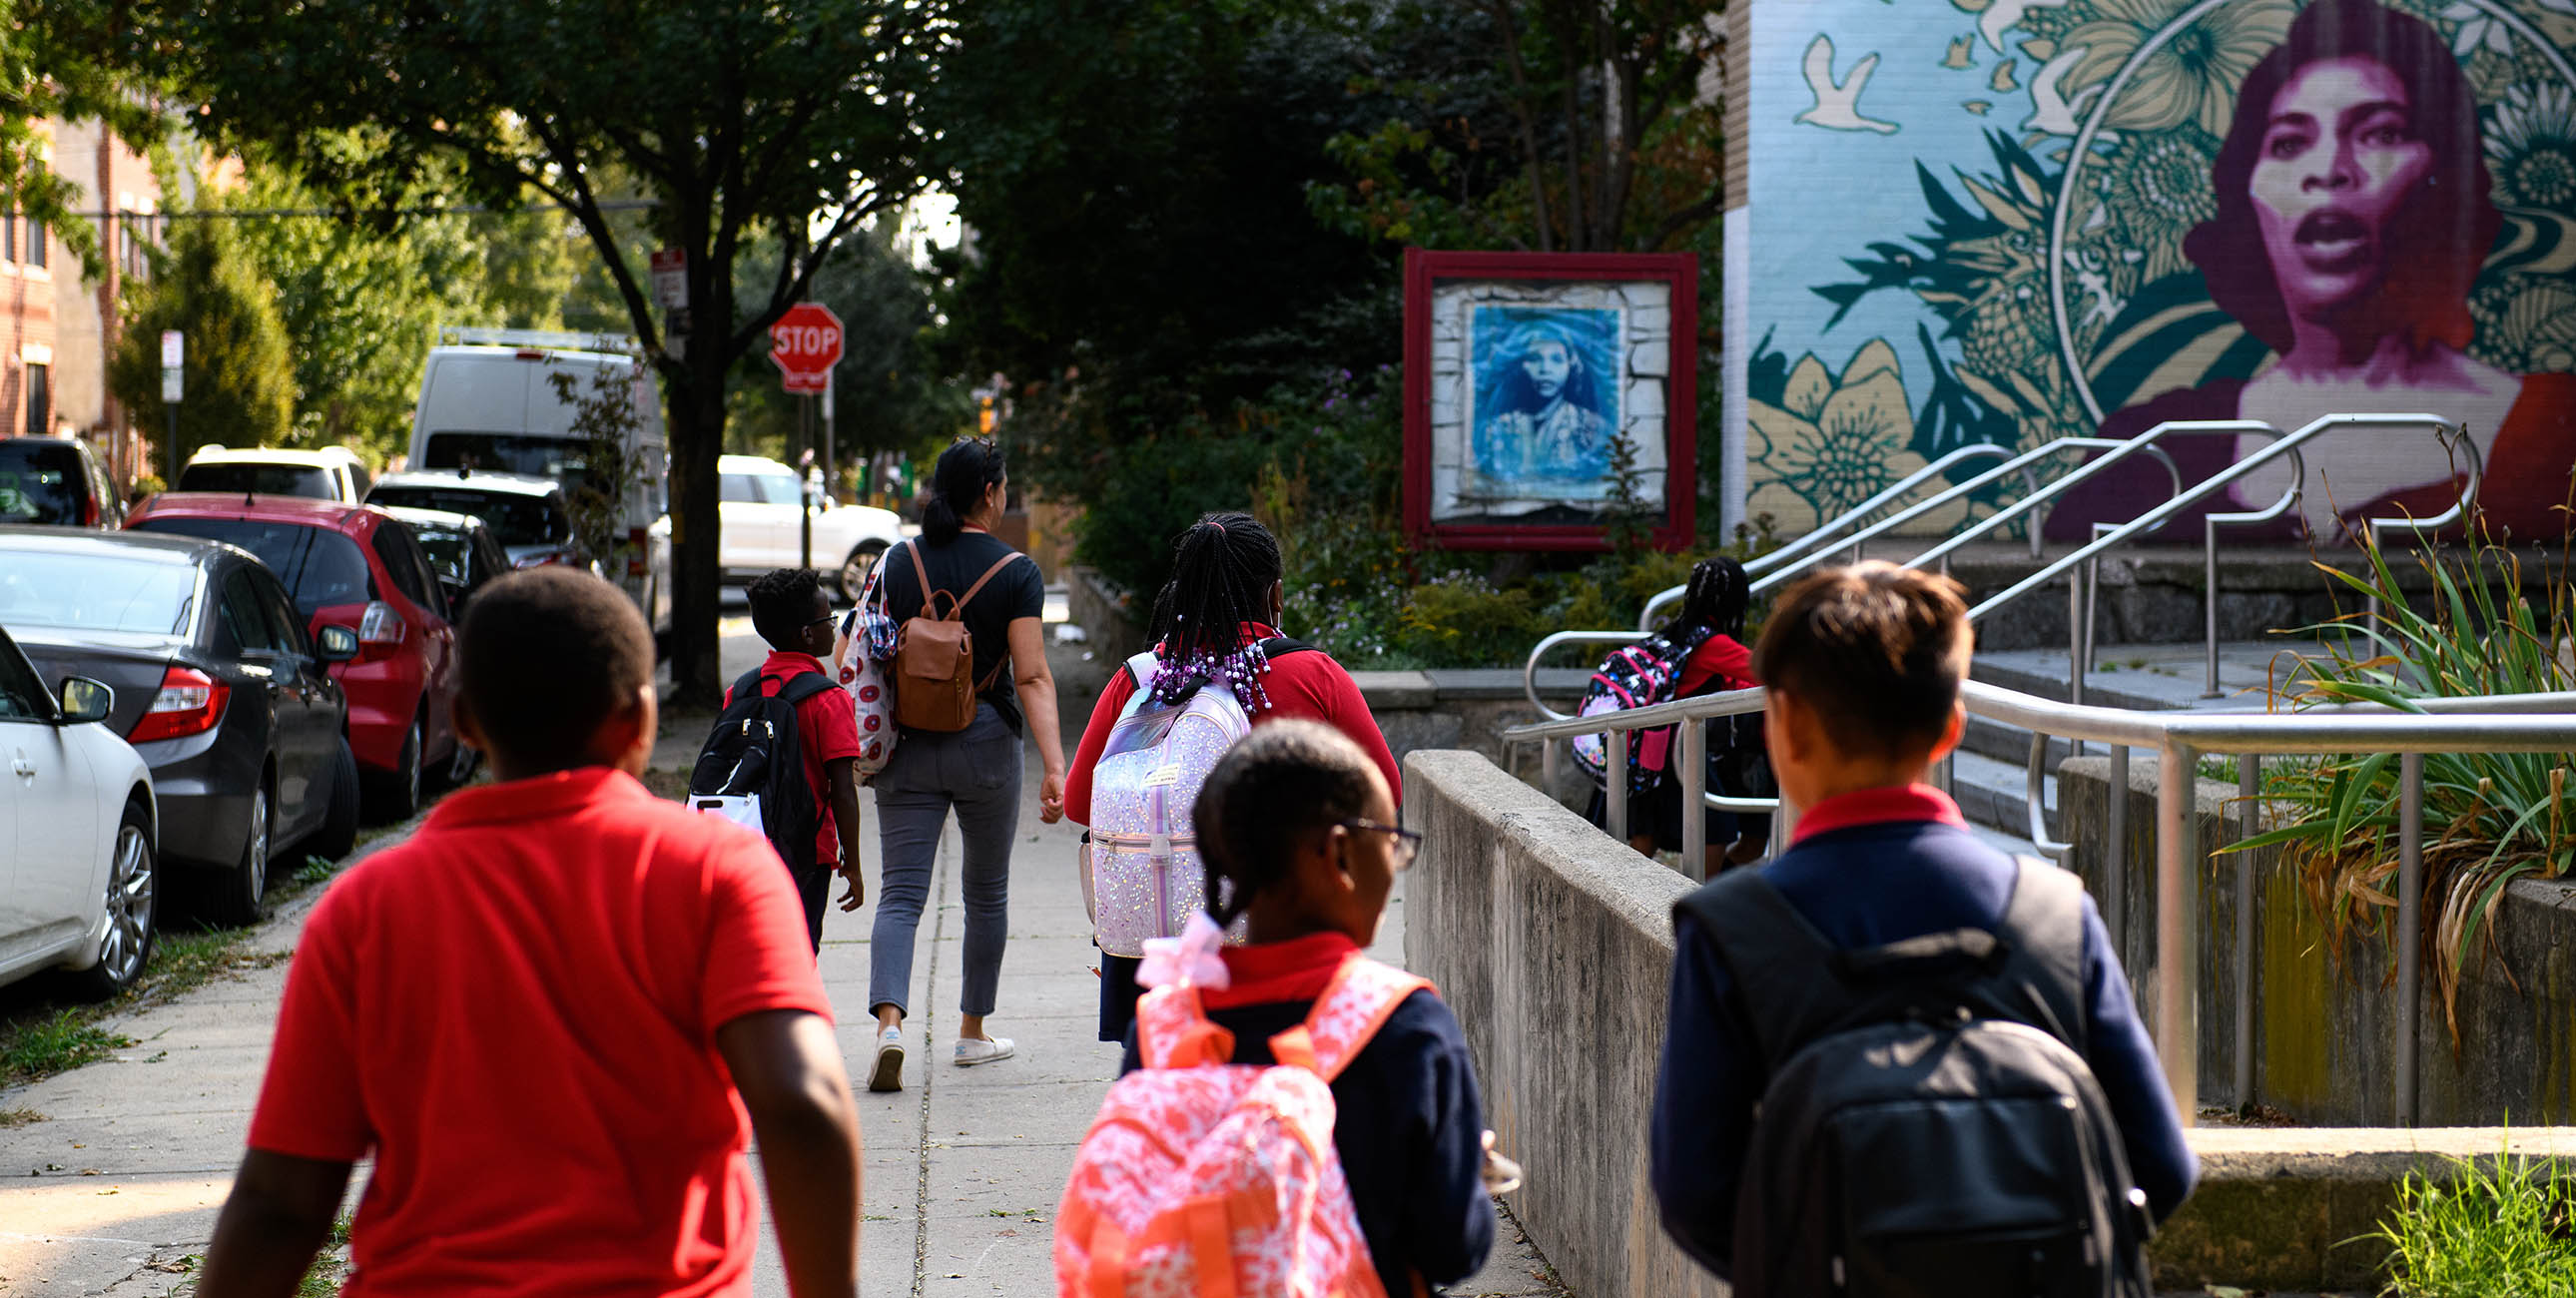 Several children, some wearing backpacks, walk along a suburban sidewalk.